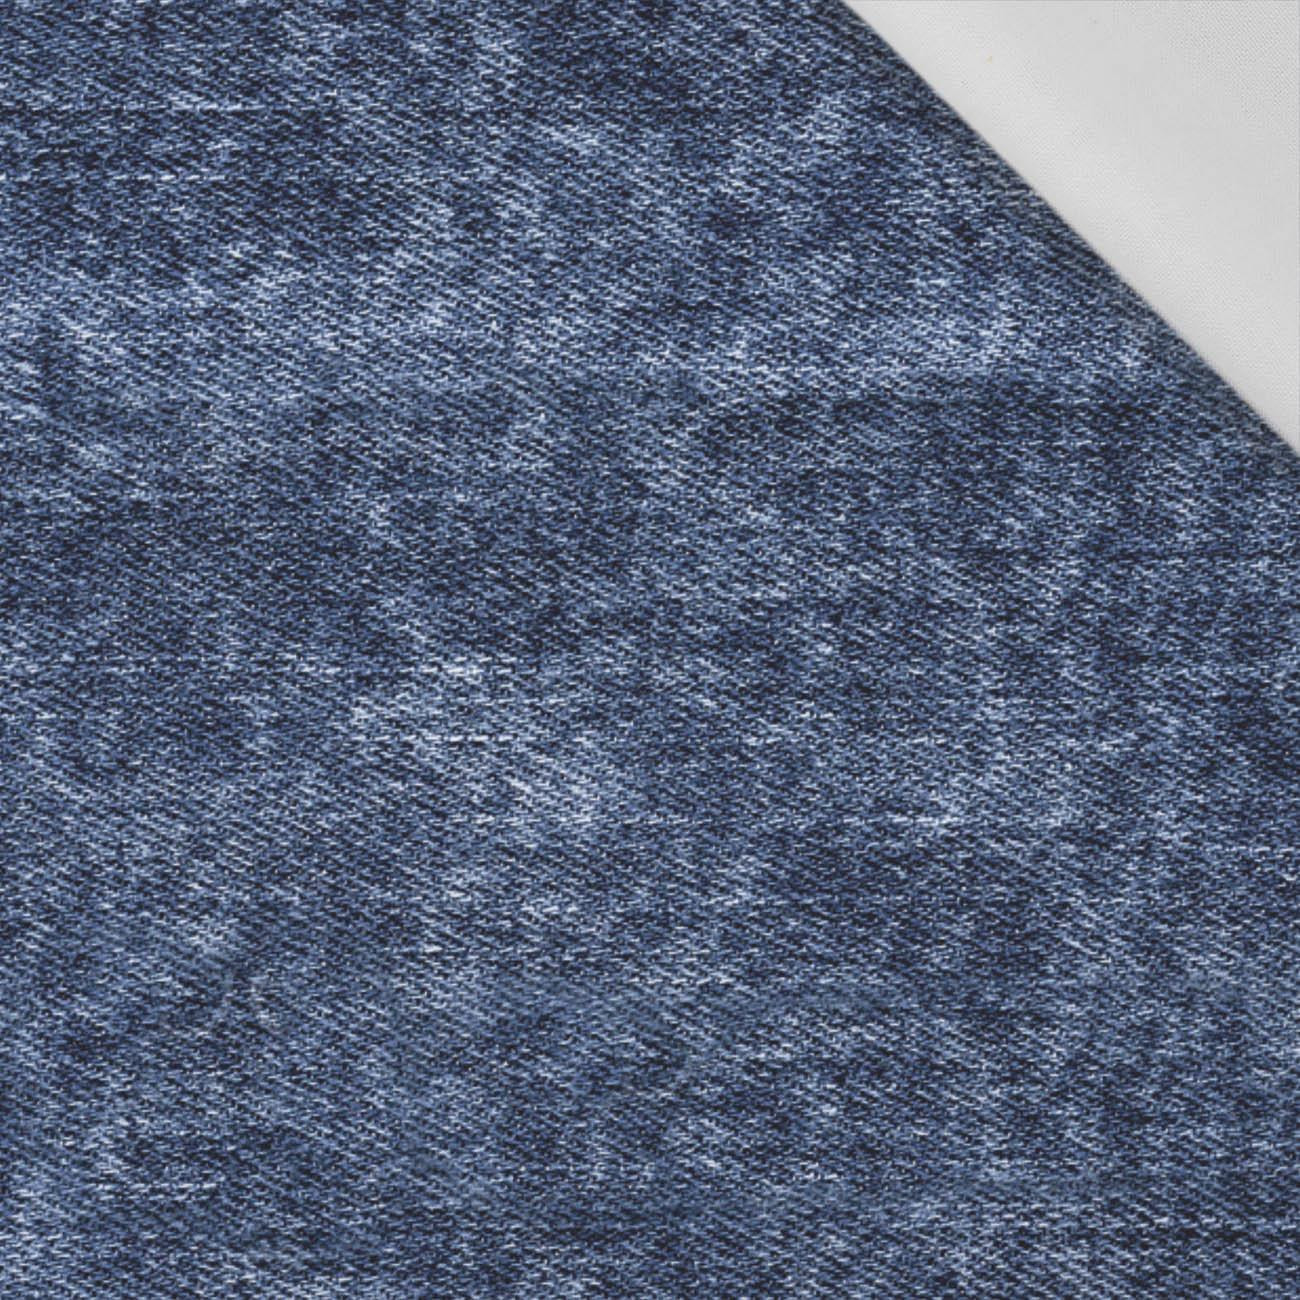 VINTAGE LOOK JEANS (dark blue) - Cotton woven fabric